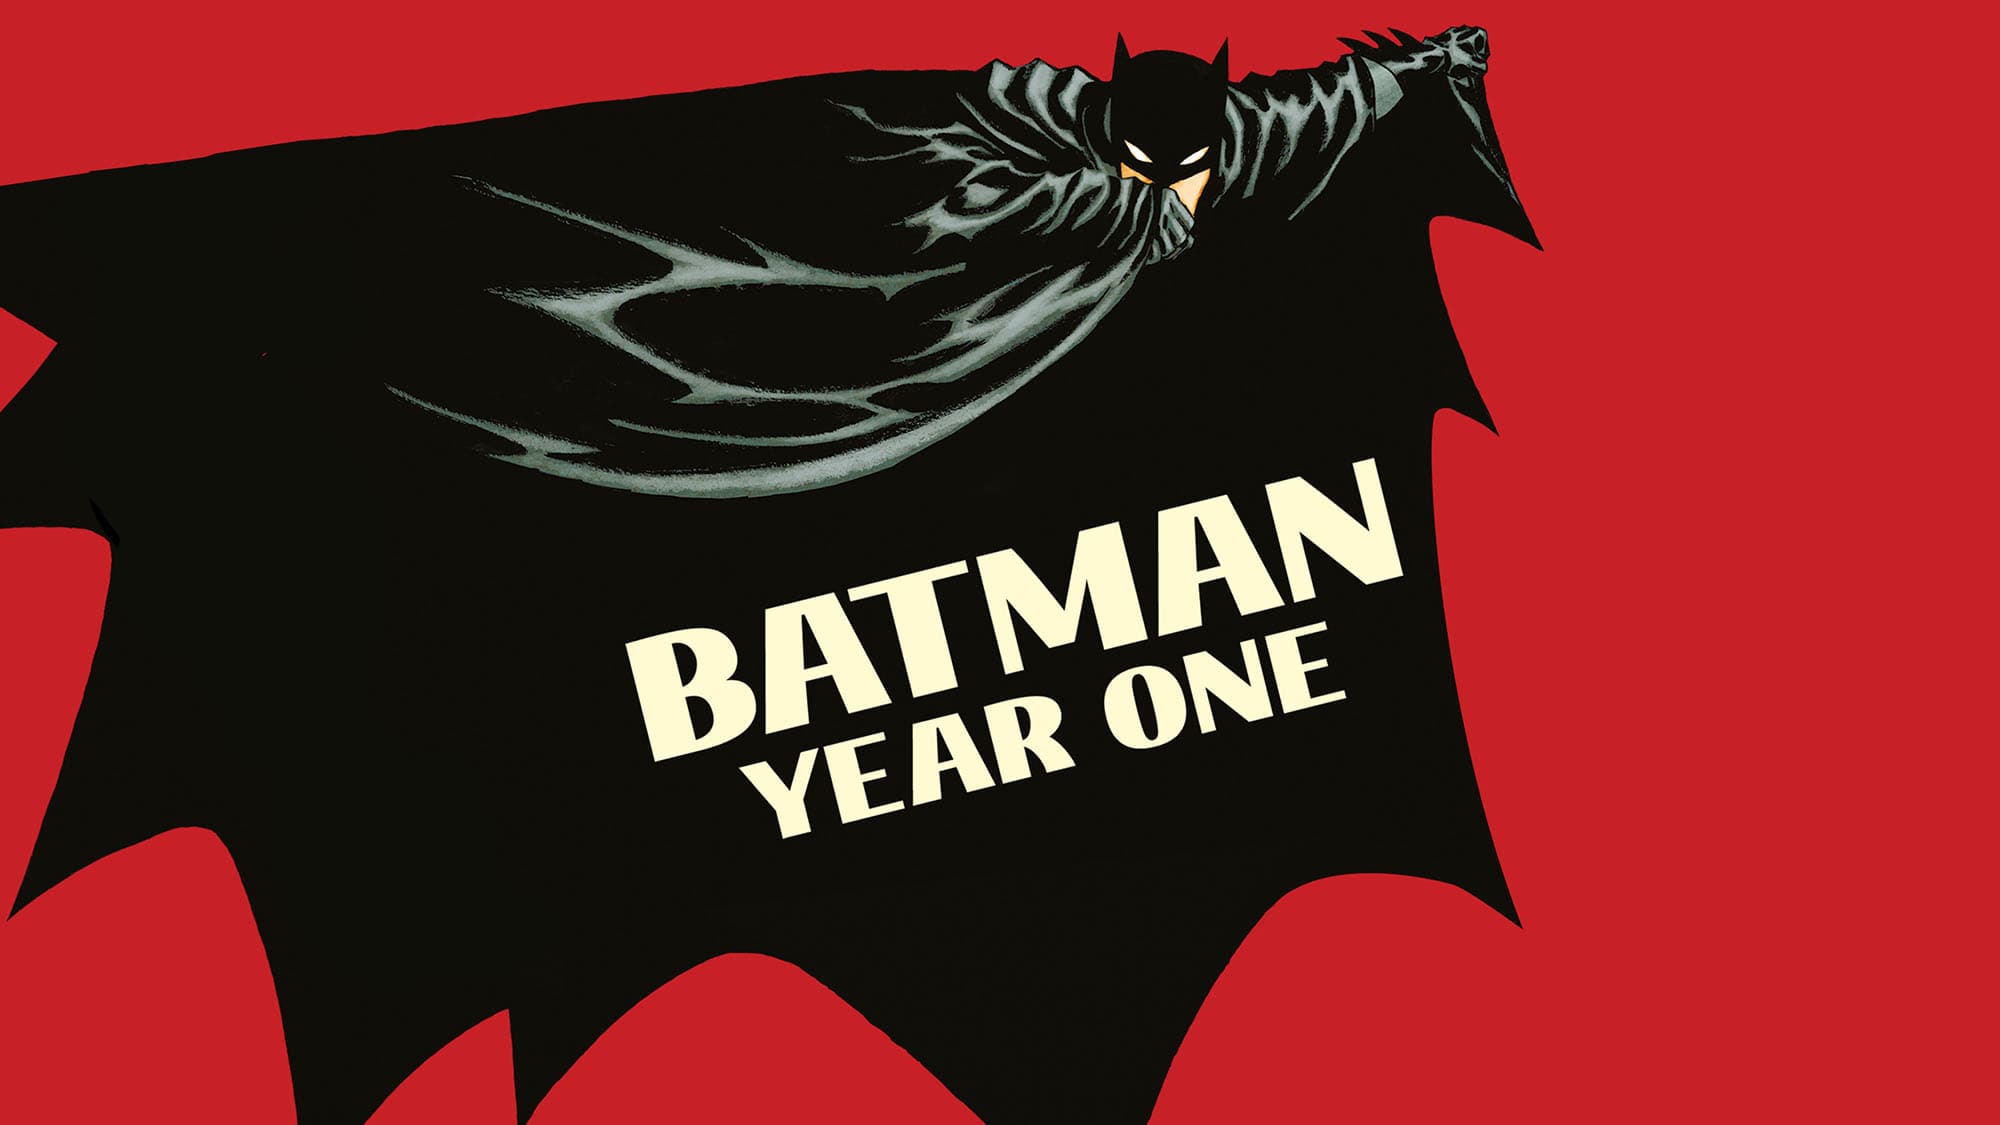 Movie Batman: Year One HD Wallpaper | Background Image